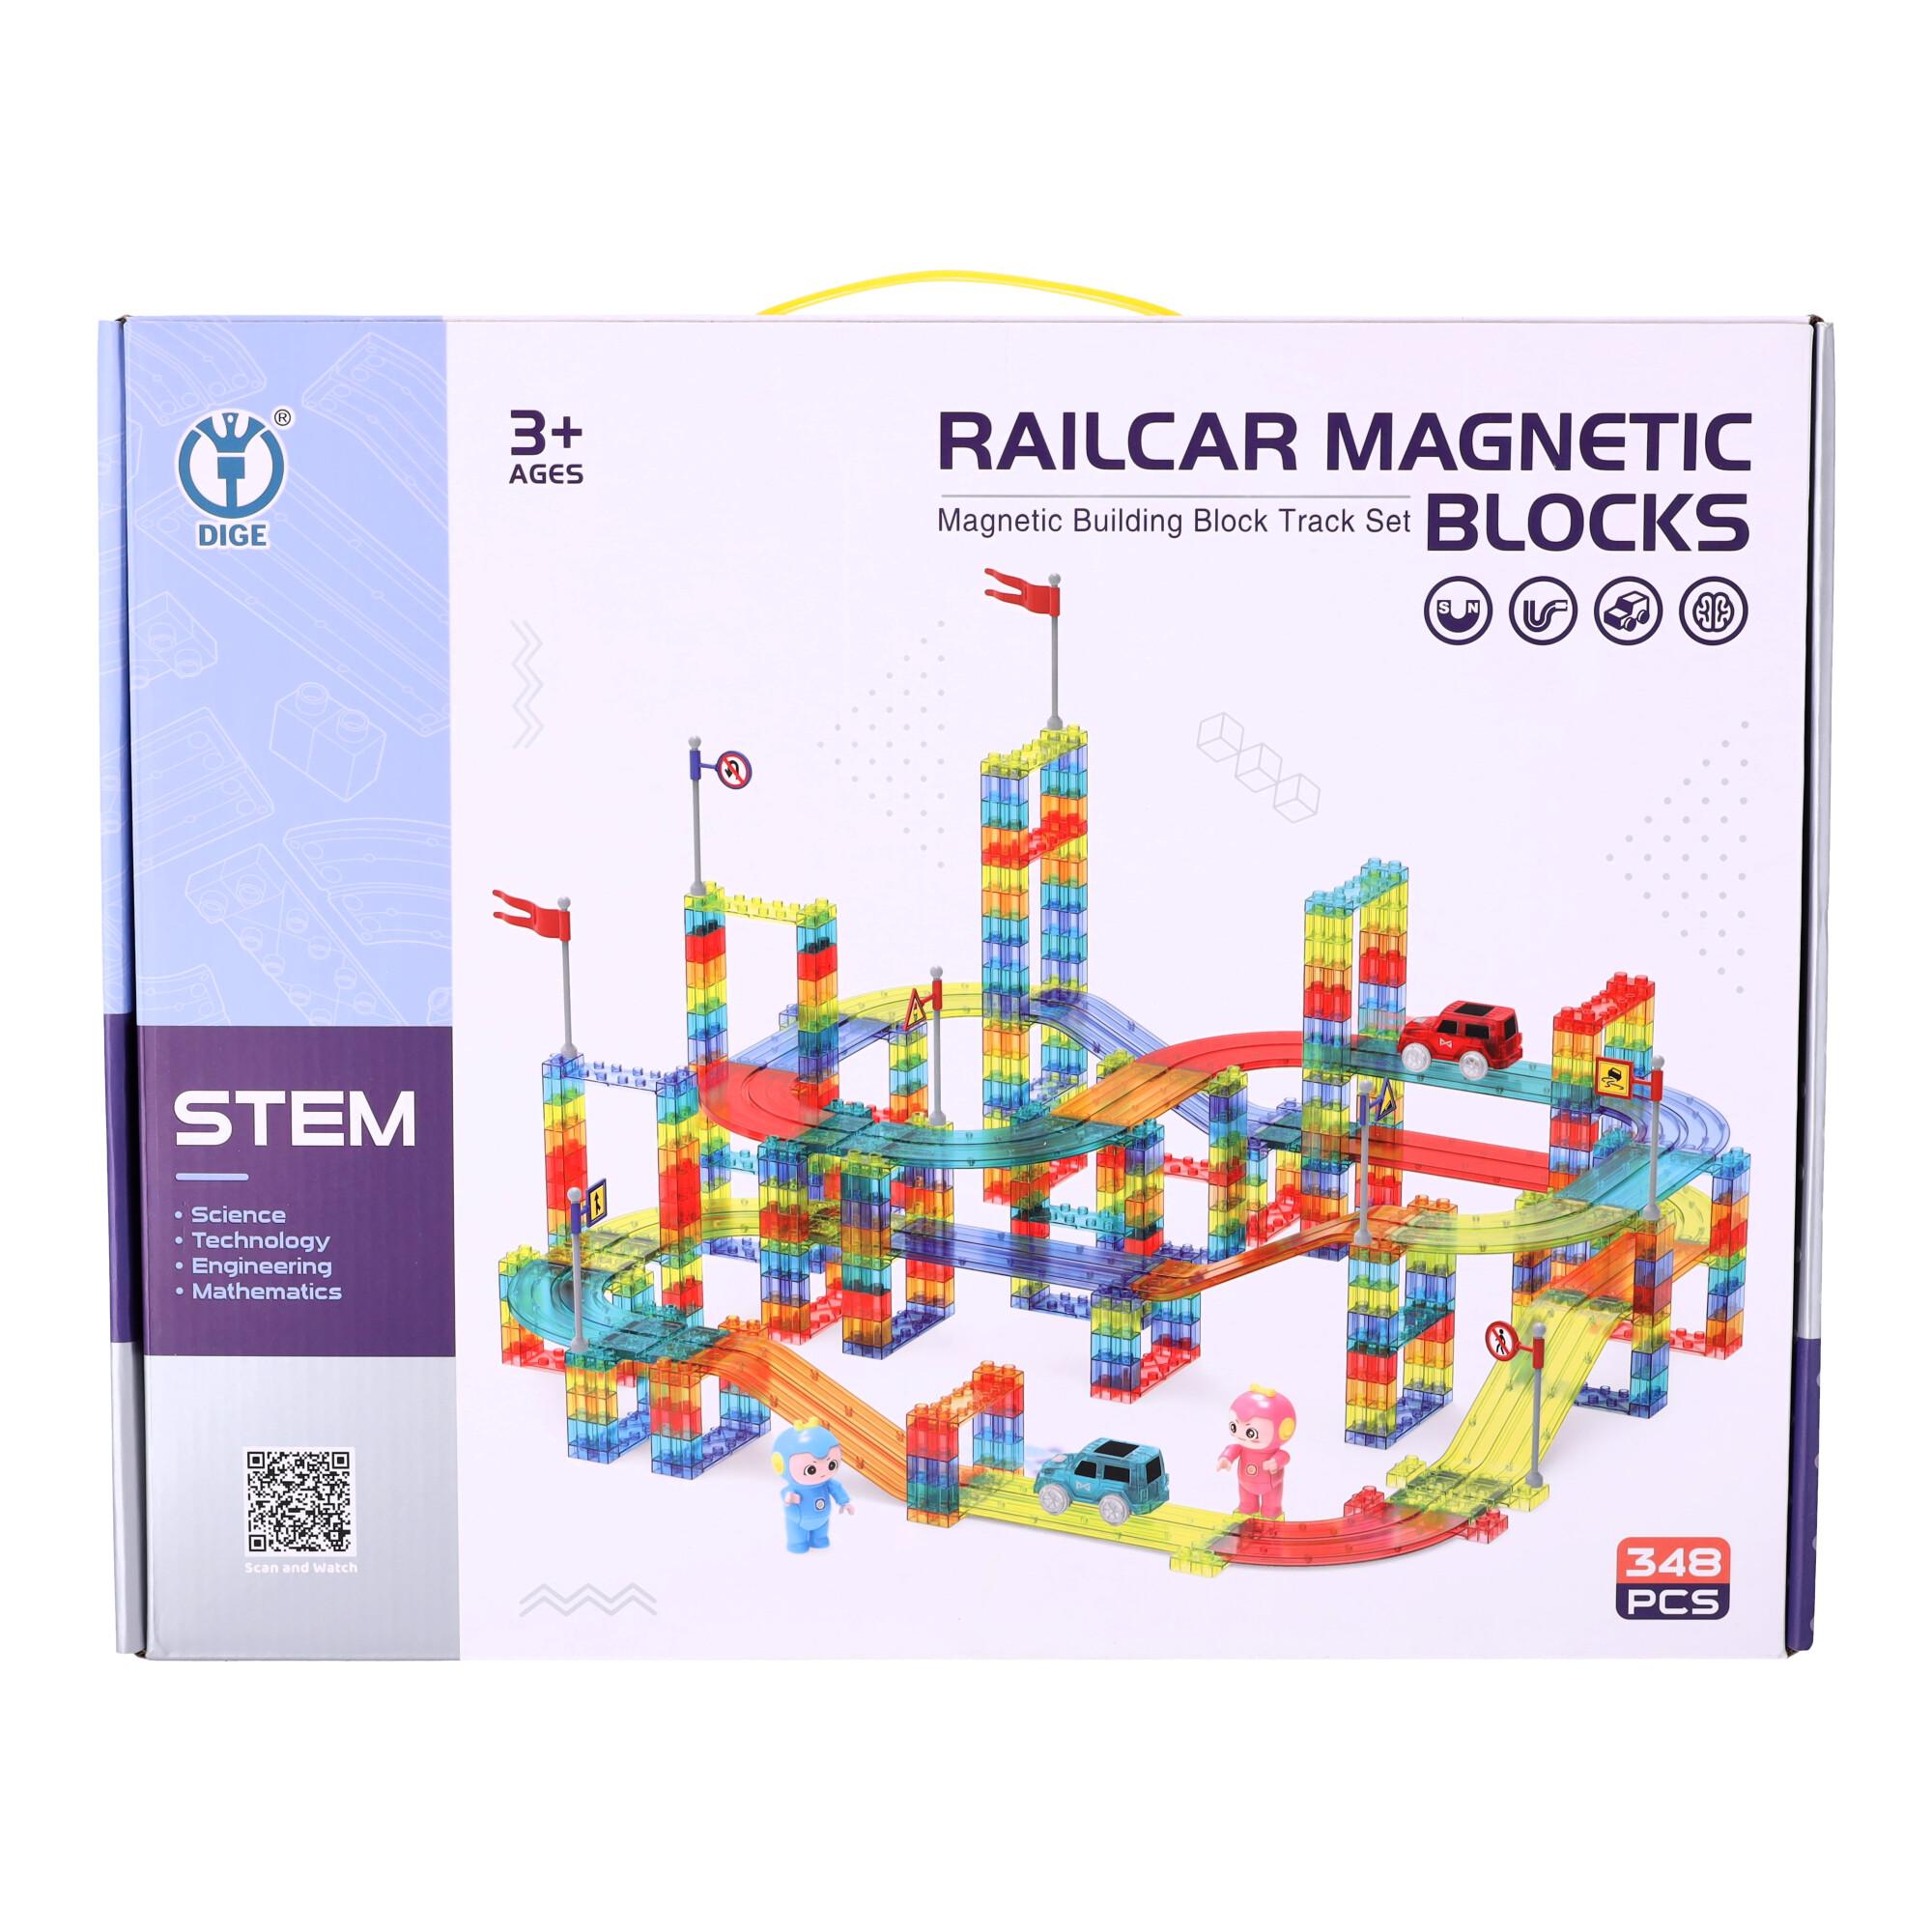 Magnetic building blocks - Tracks - Set of 348 pieces